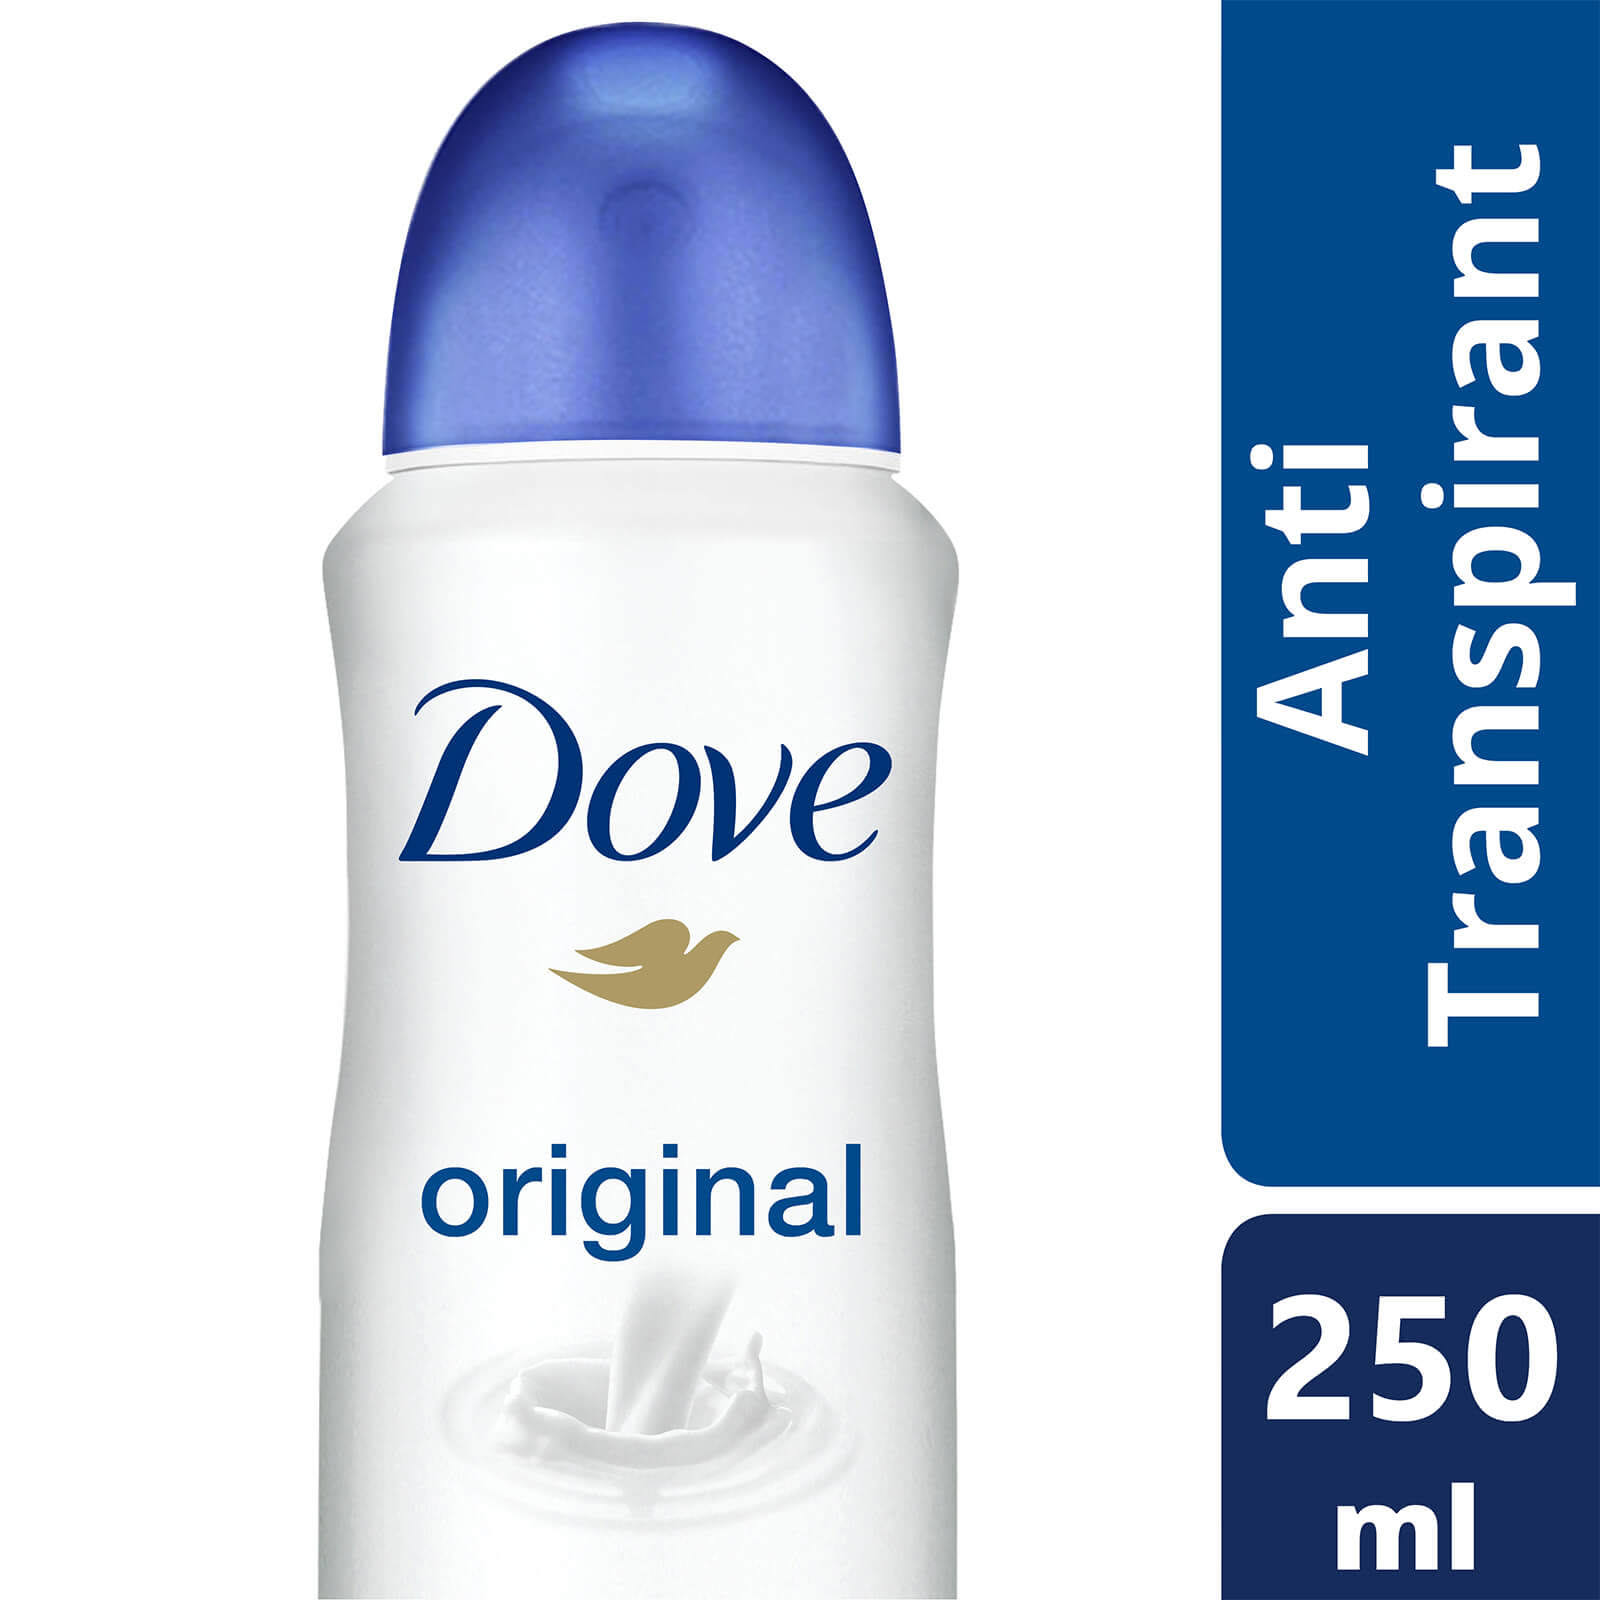 Dove Original Deodorant Spray - 250 ml